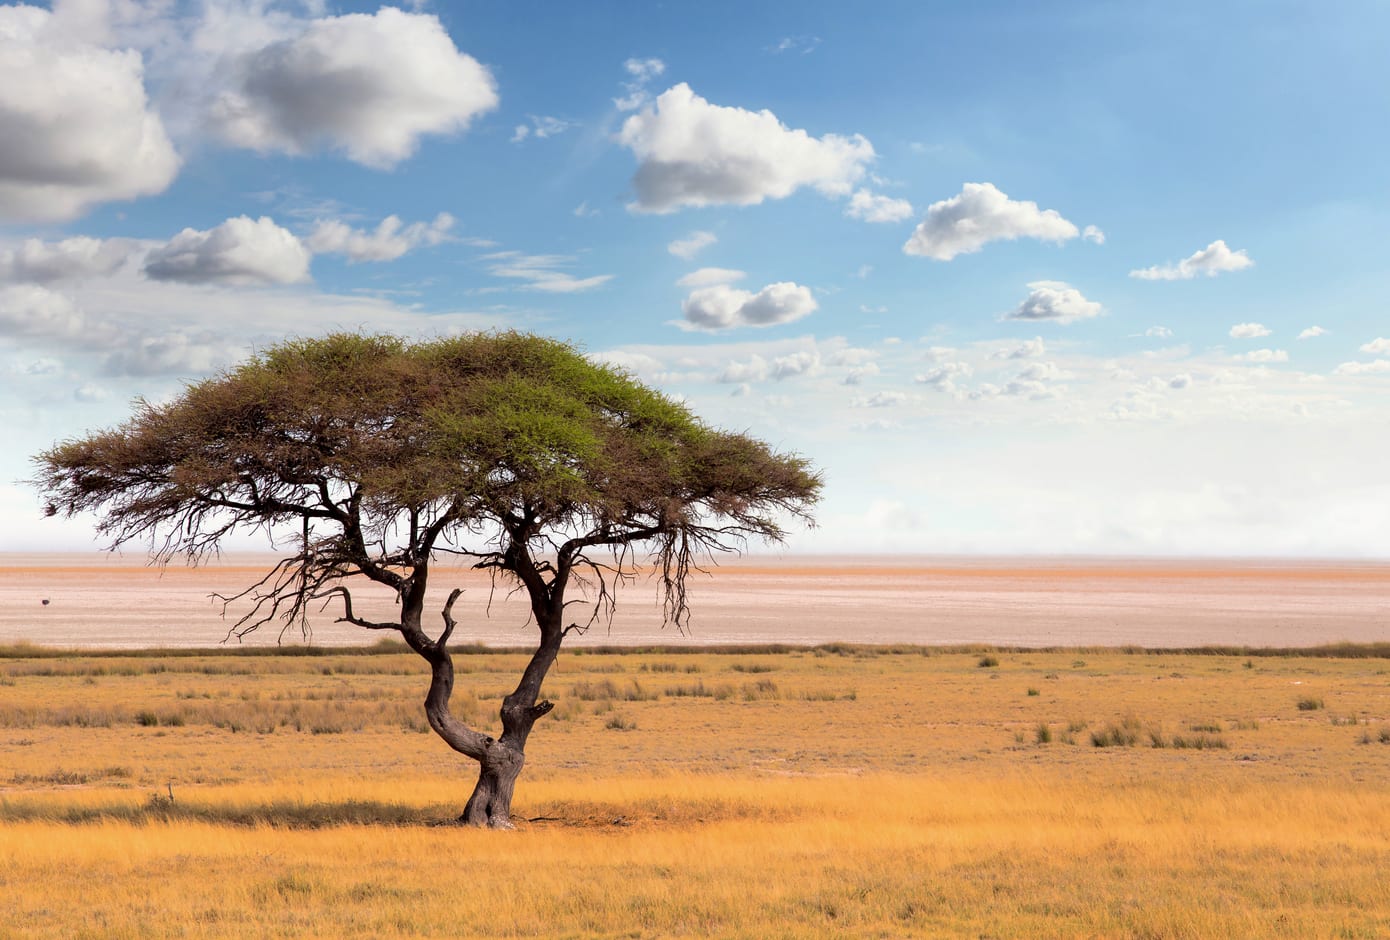 Acacia tree in Botswana, Africa.